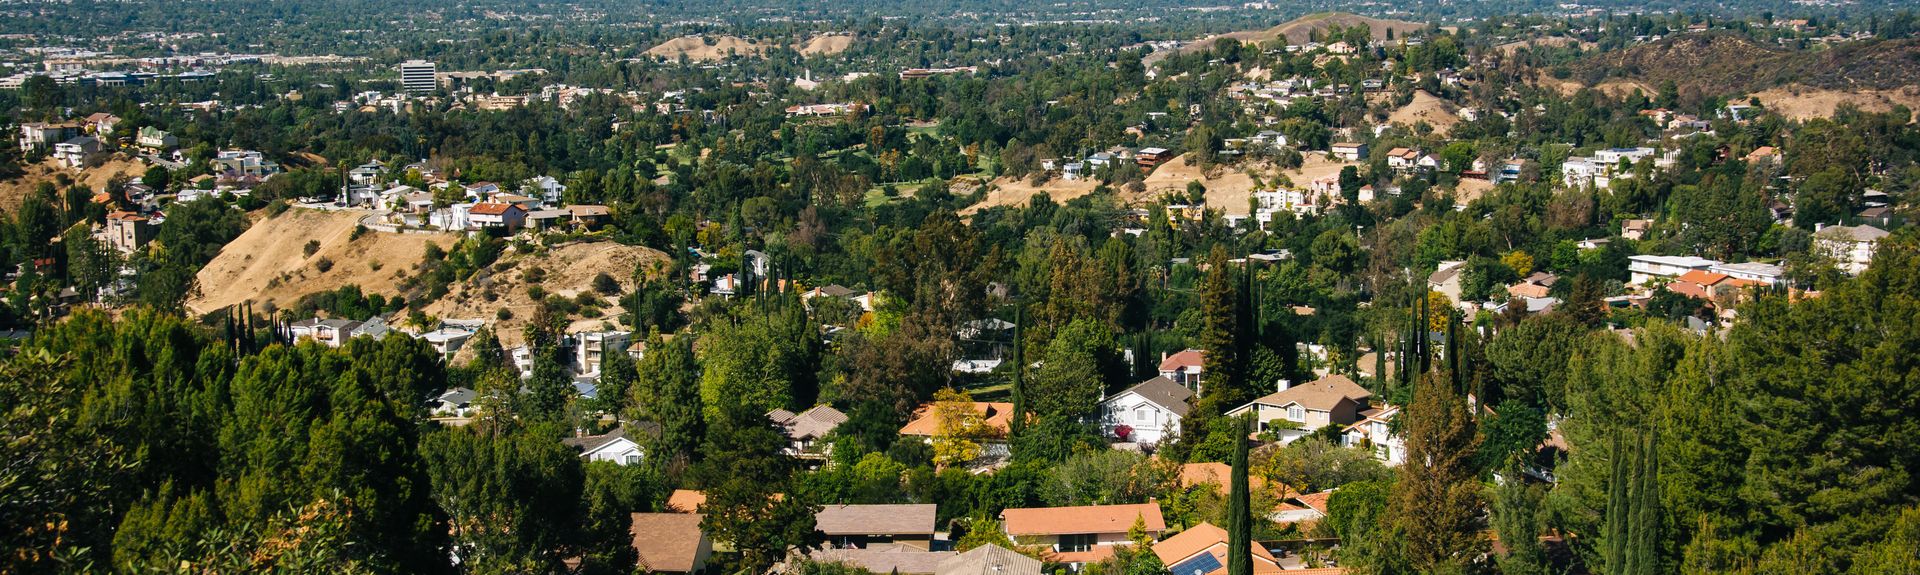 San Fernando Valley, CA